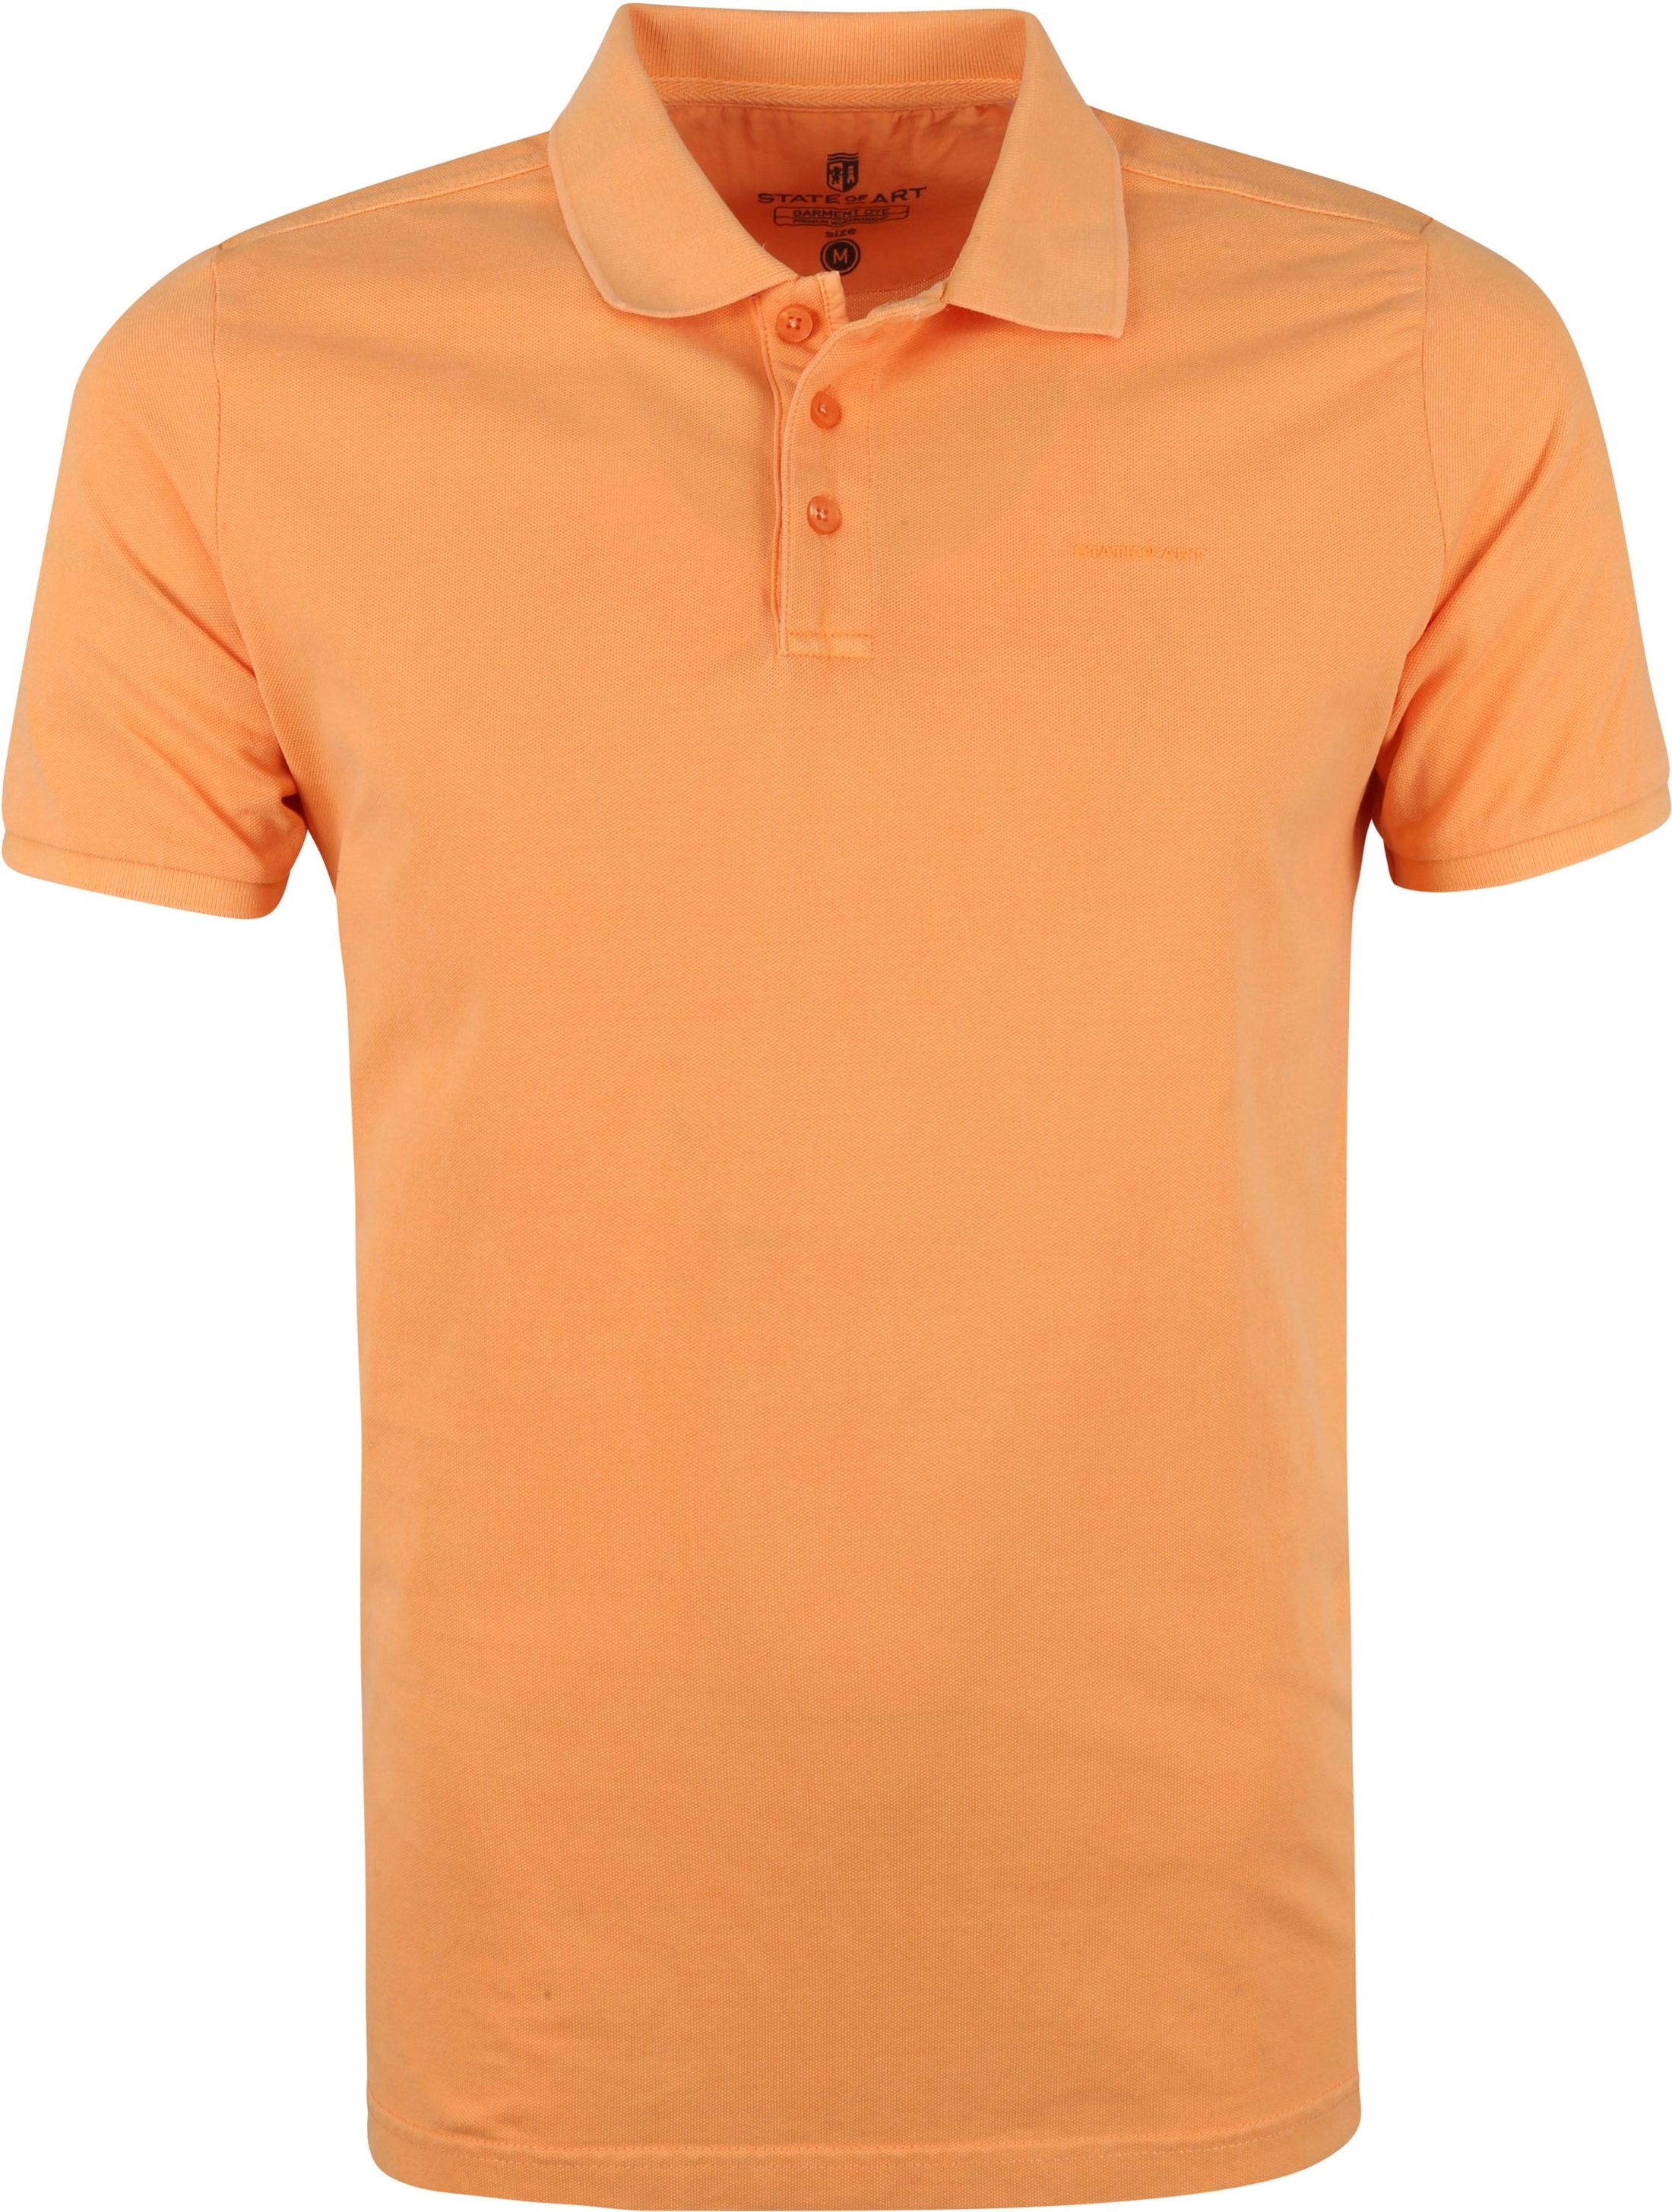 State Of Art Pique Polo Shirt Orange size L